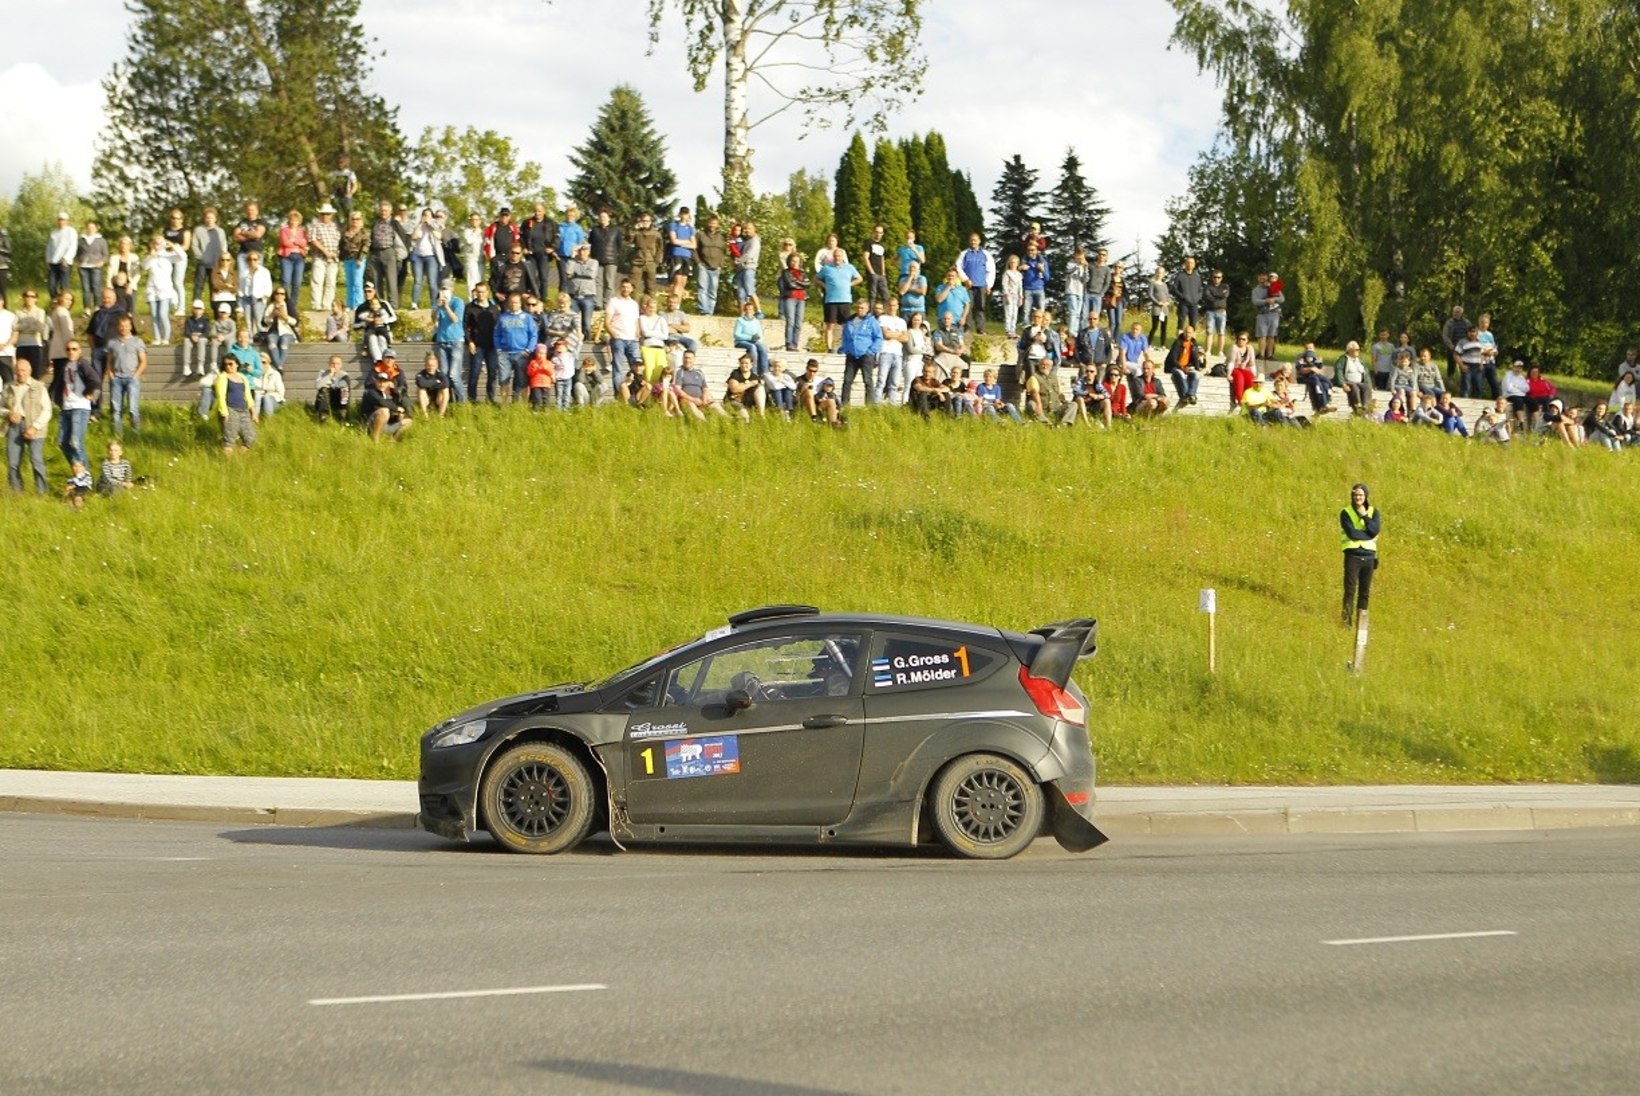 Juba homme! Tallinna rallil näeb kahte WRC-autot